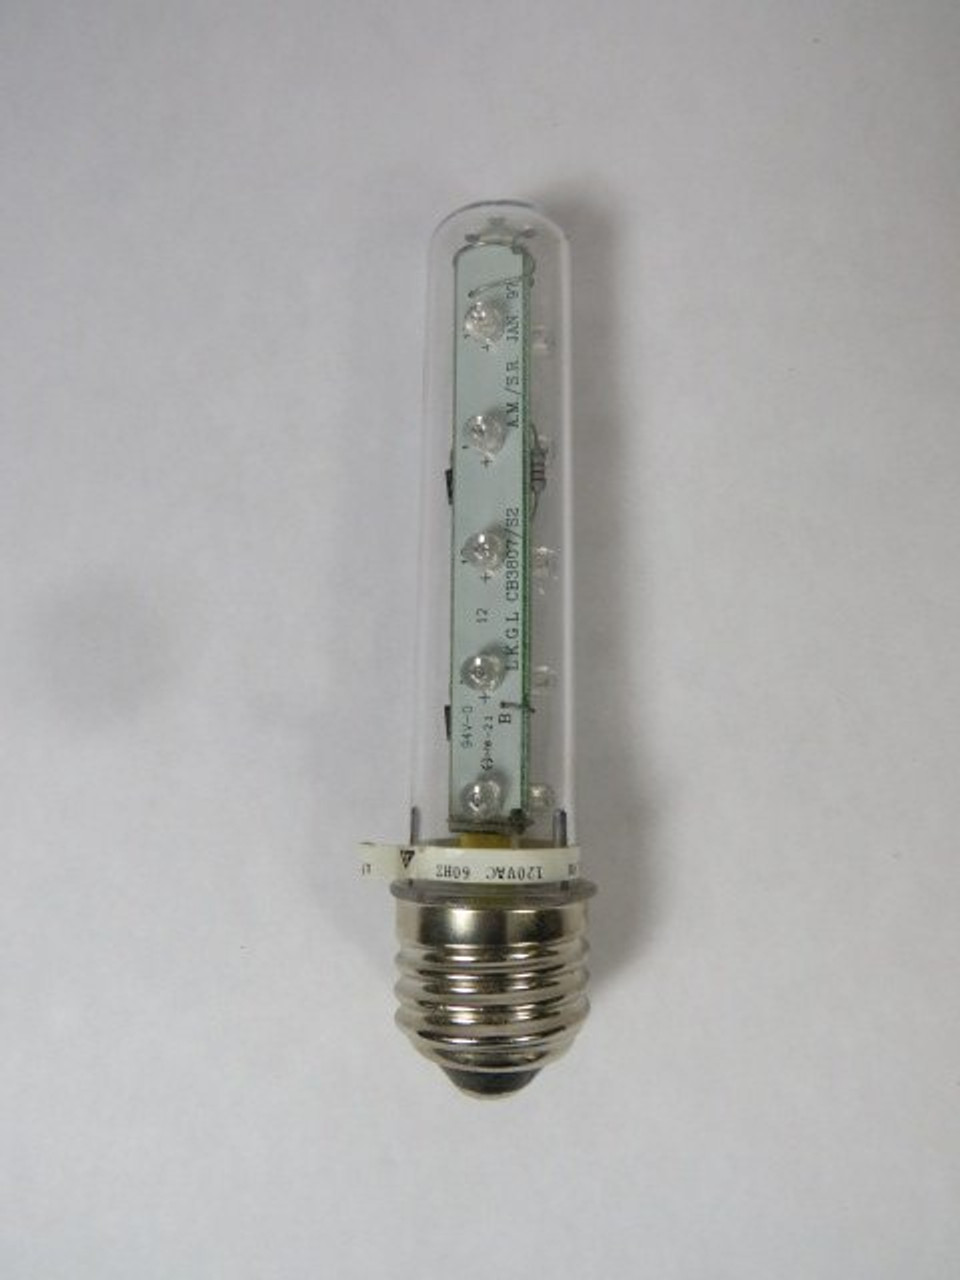 Emergi-Lite BULBI/HB-M0.8W Bulb 120VAC 60HZ USED